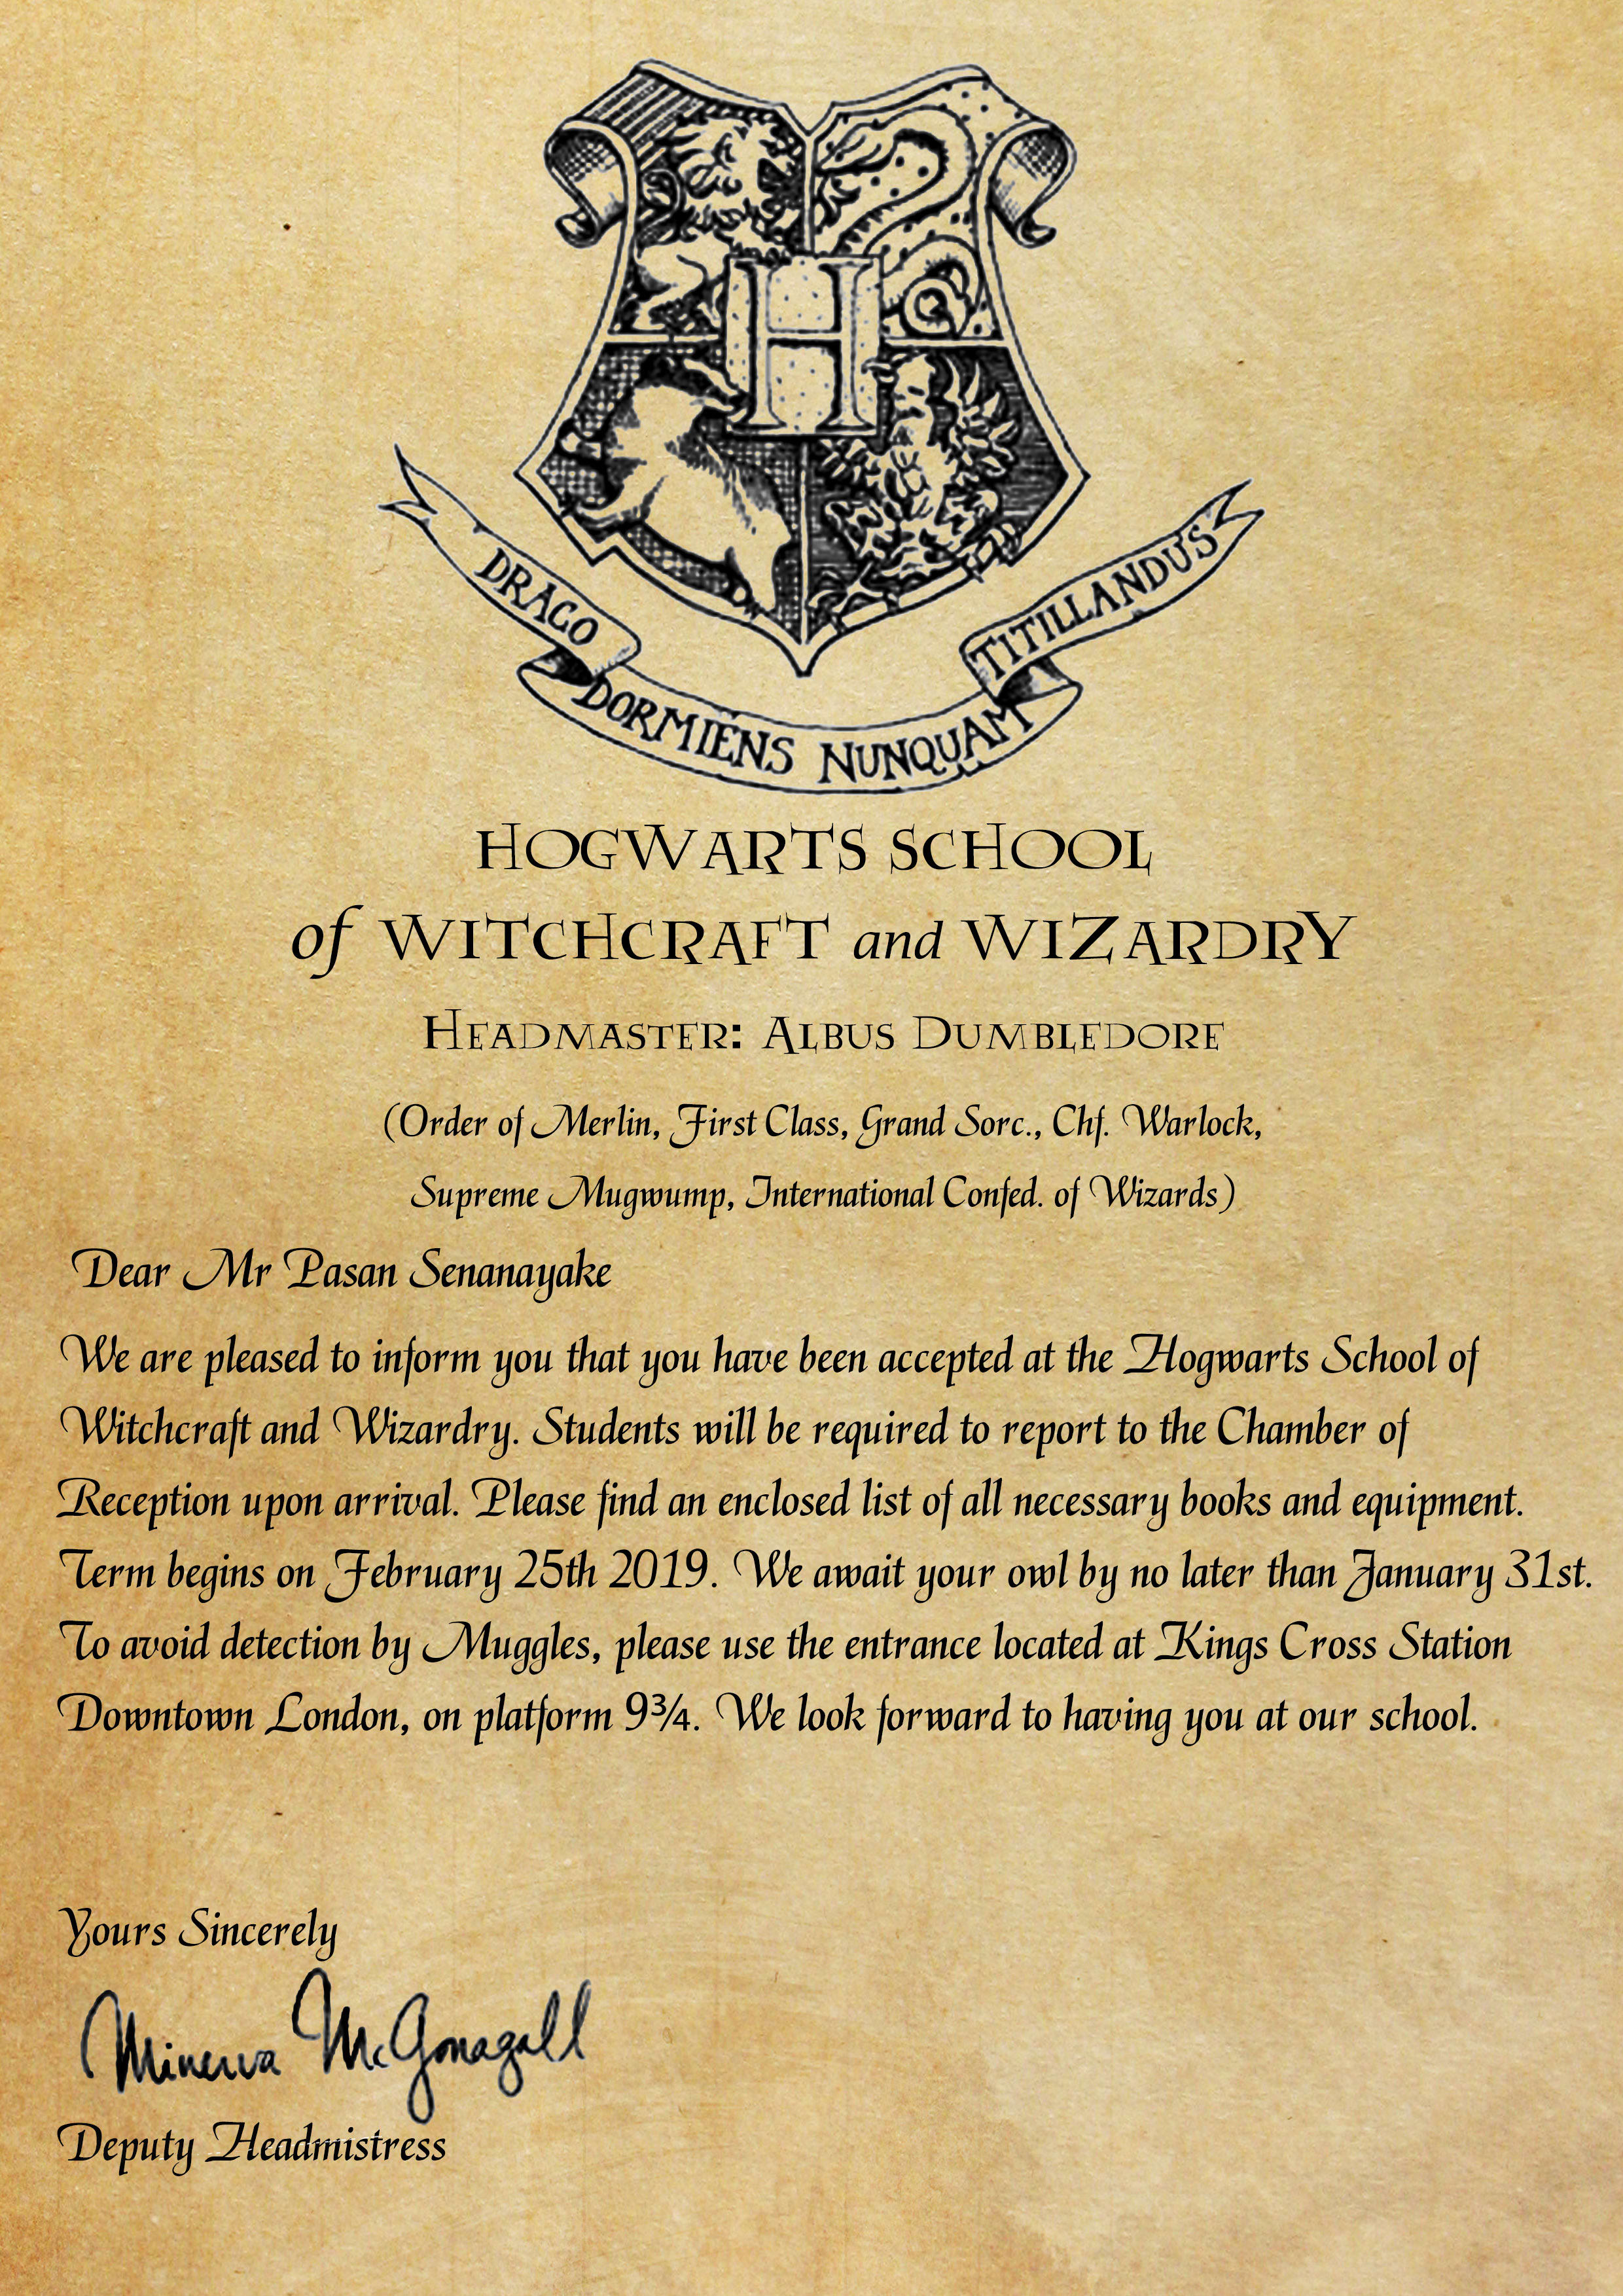 Personalized Hogwarts acceptance letter